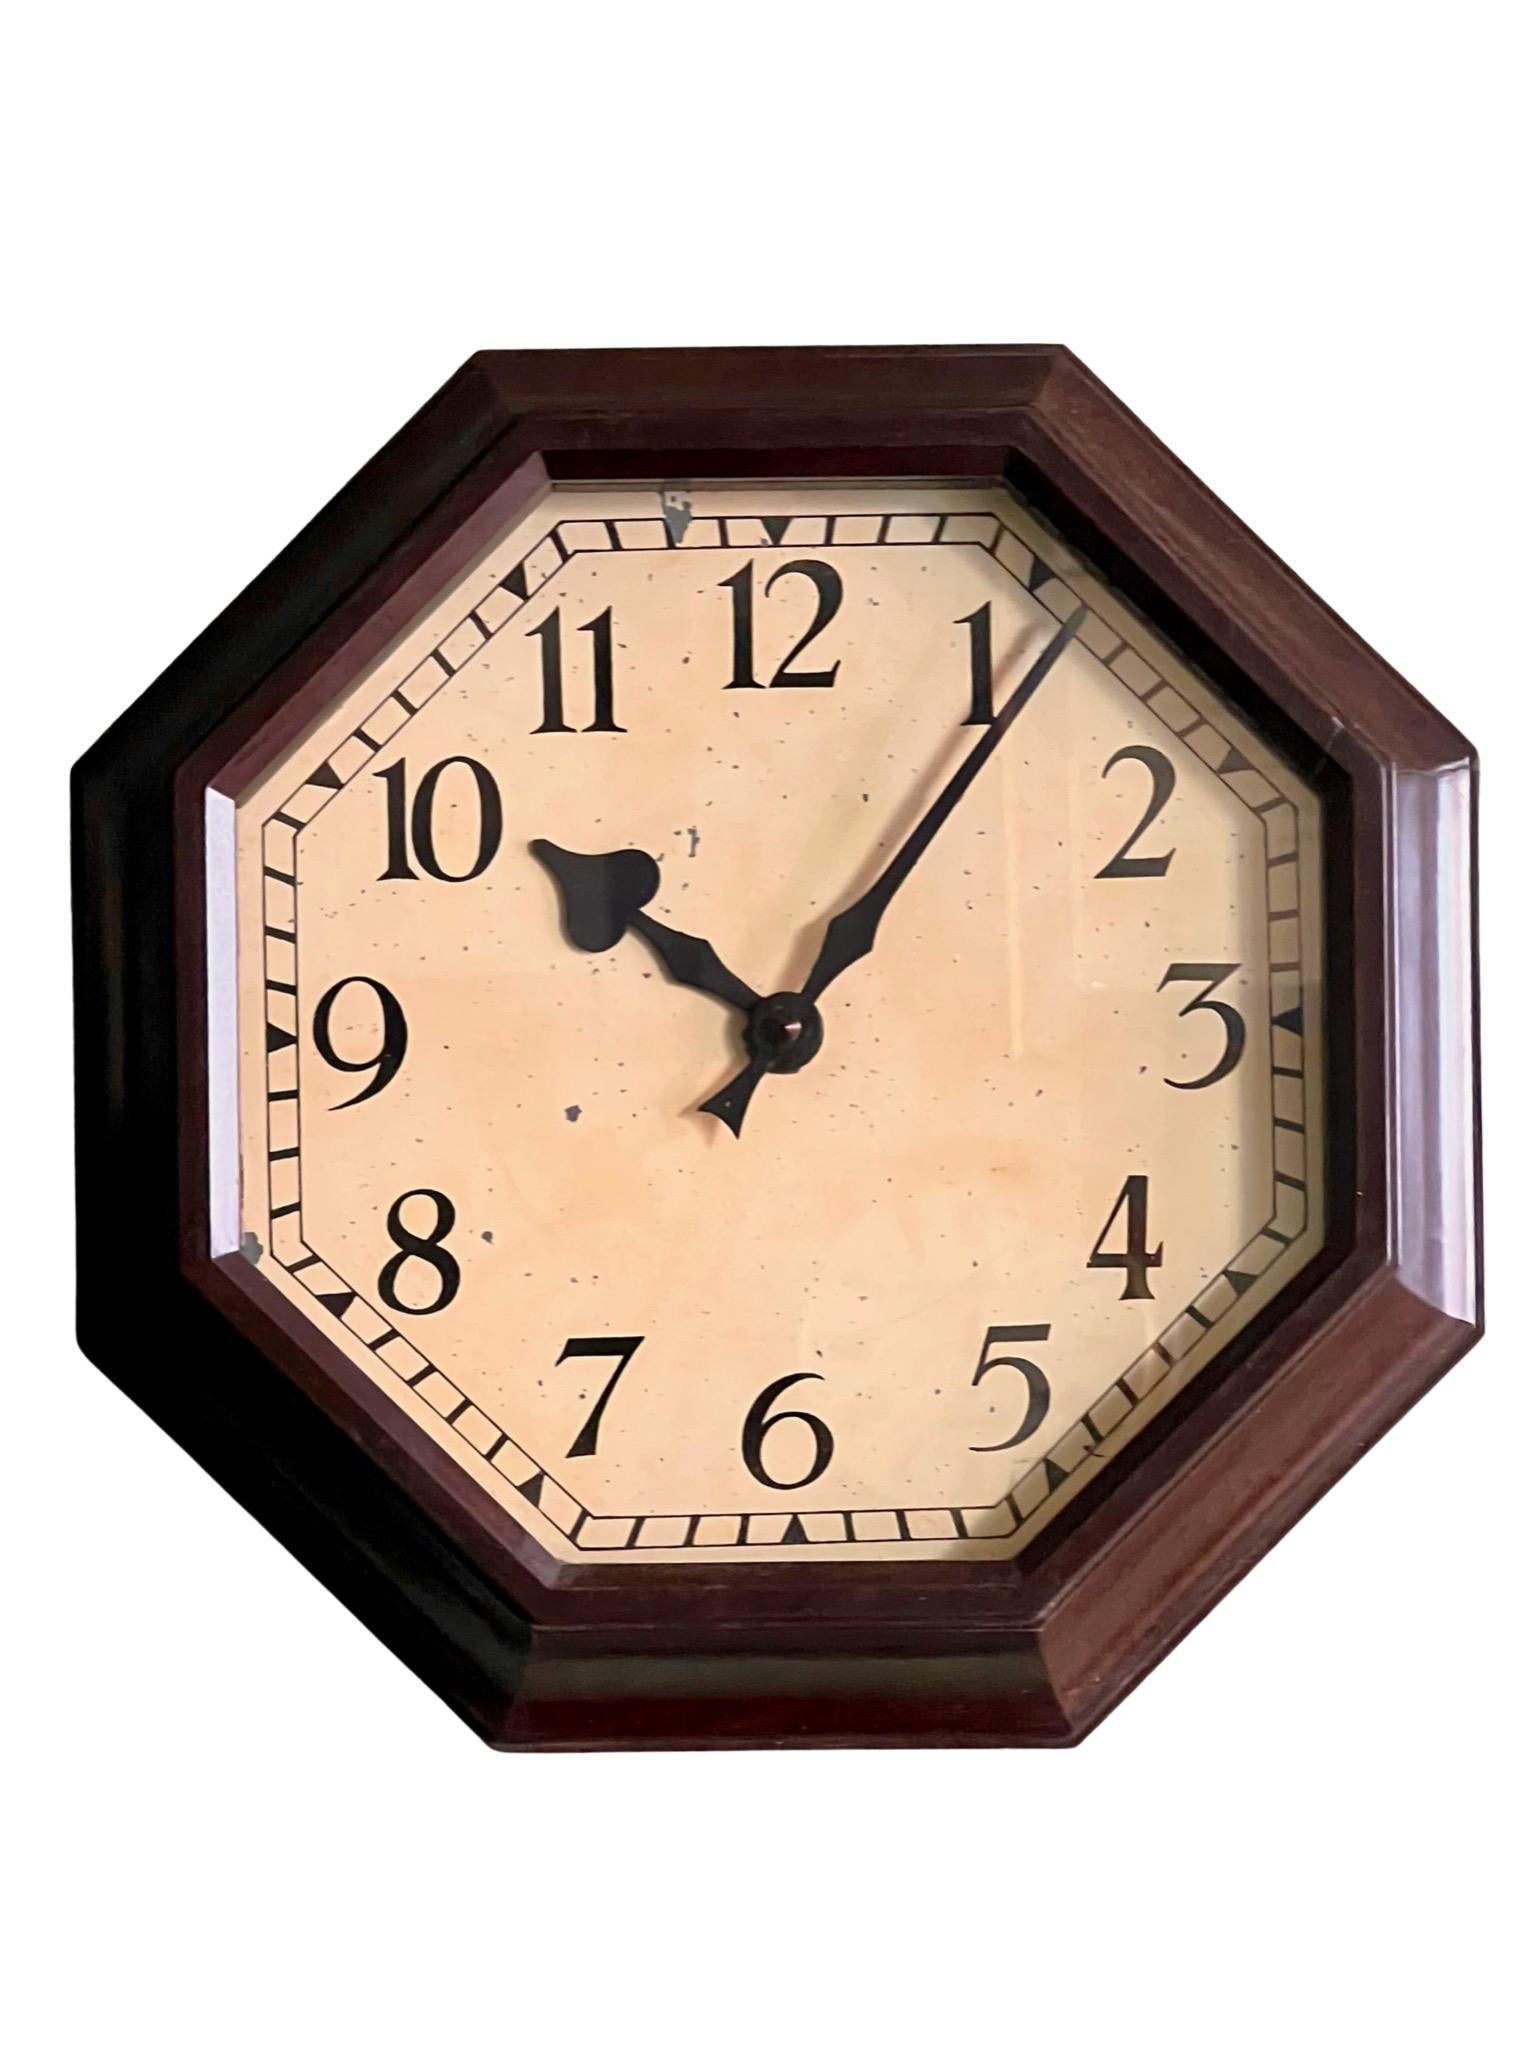 bakelite clock